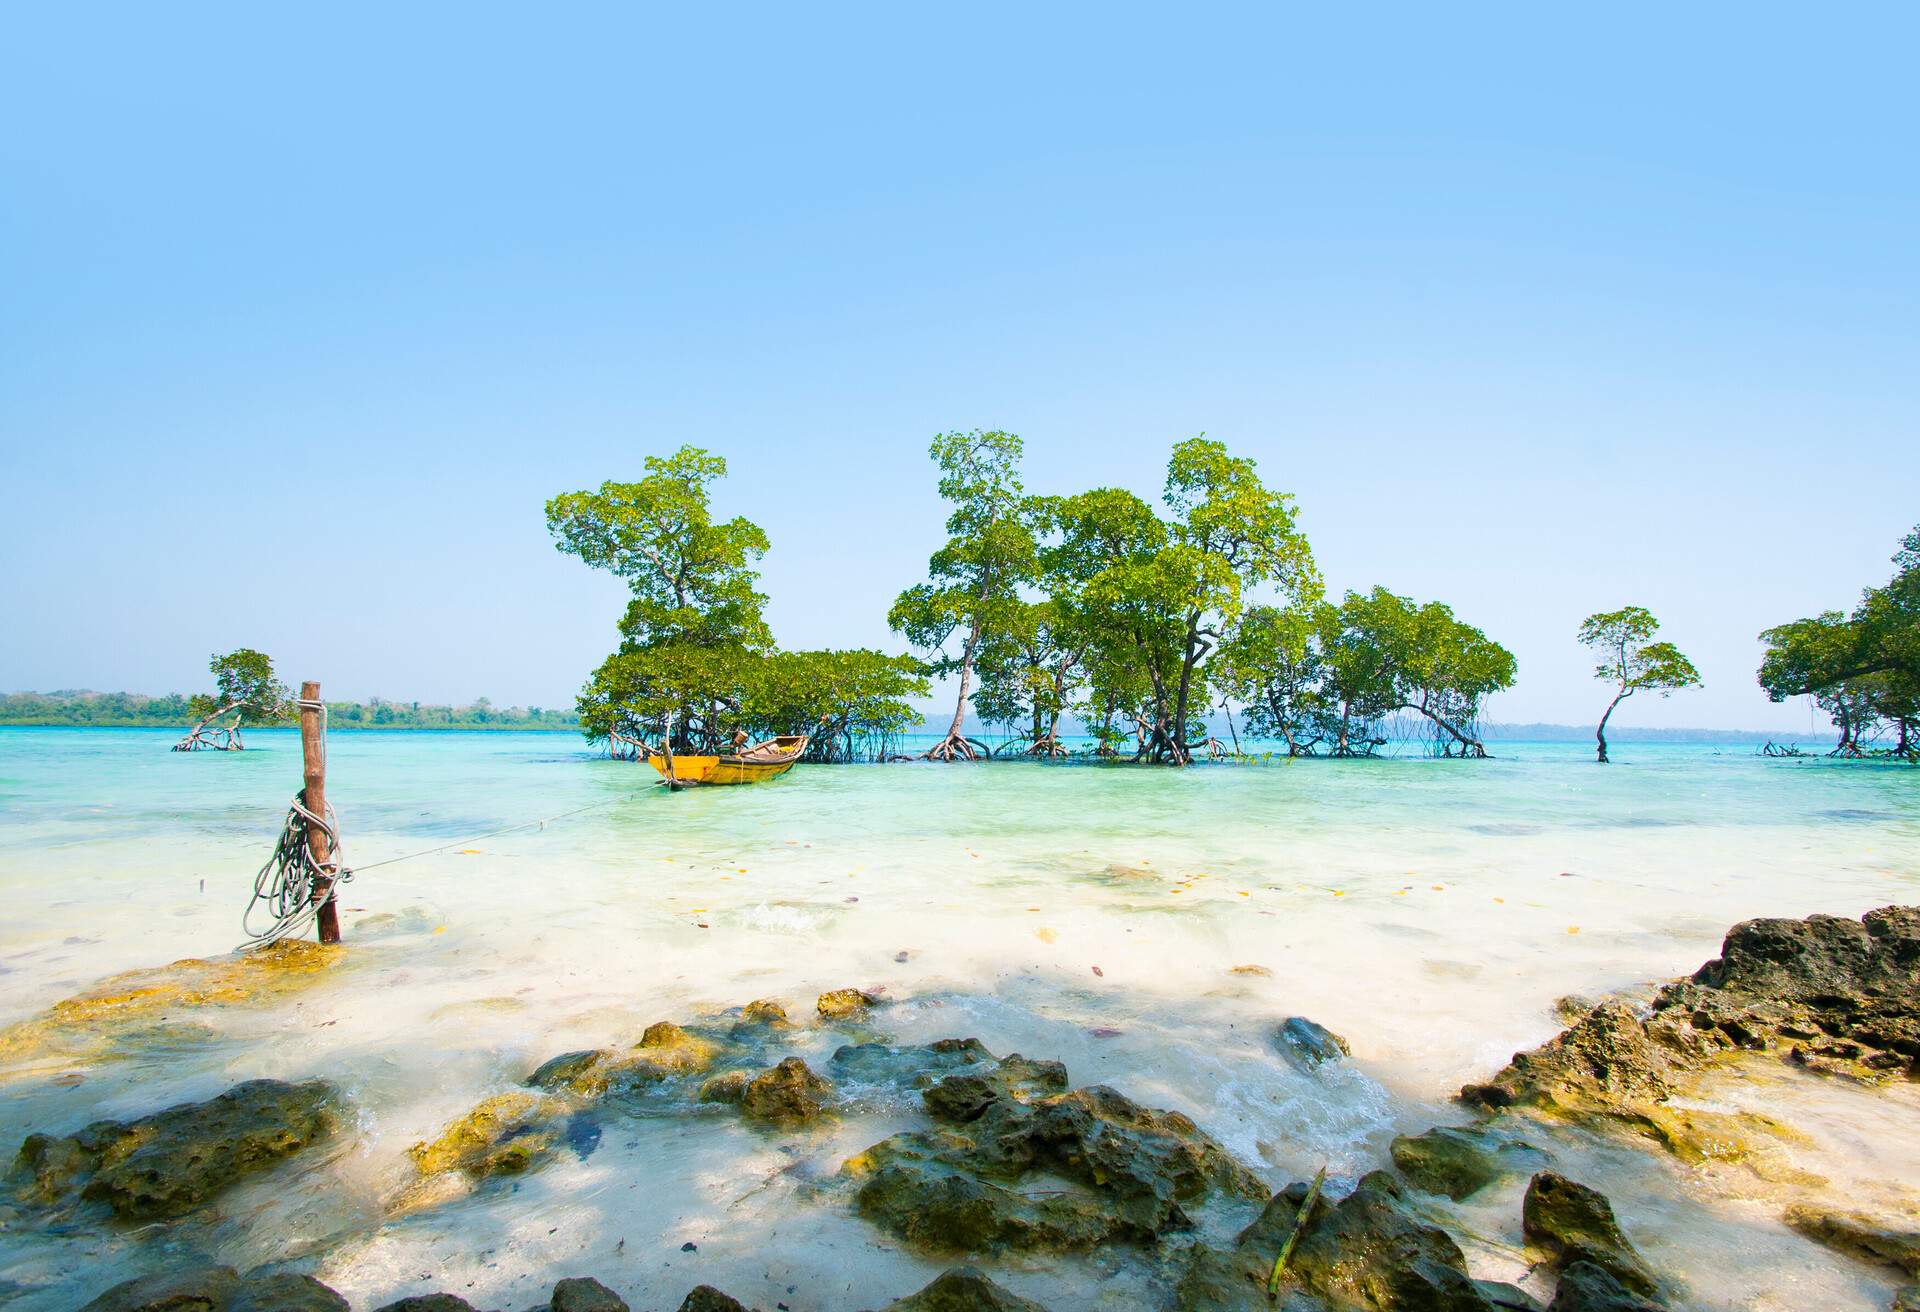 View of Havelock Island Beach, tree in the sea water, Andaman & Nicobar Islands